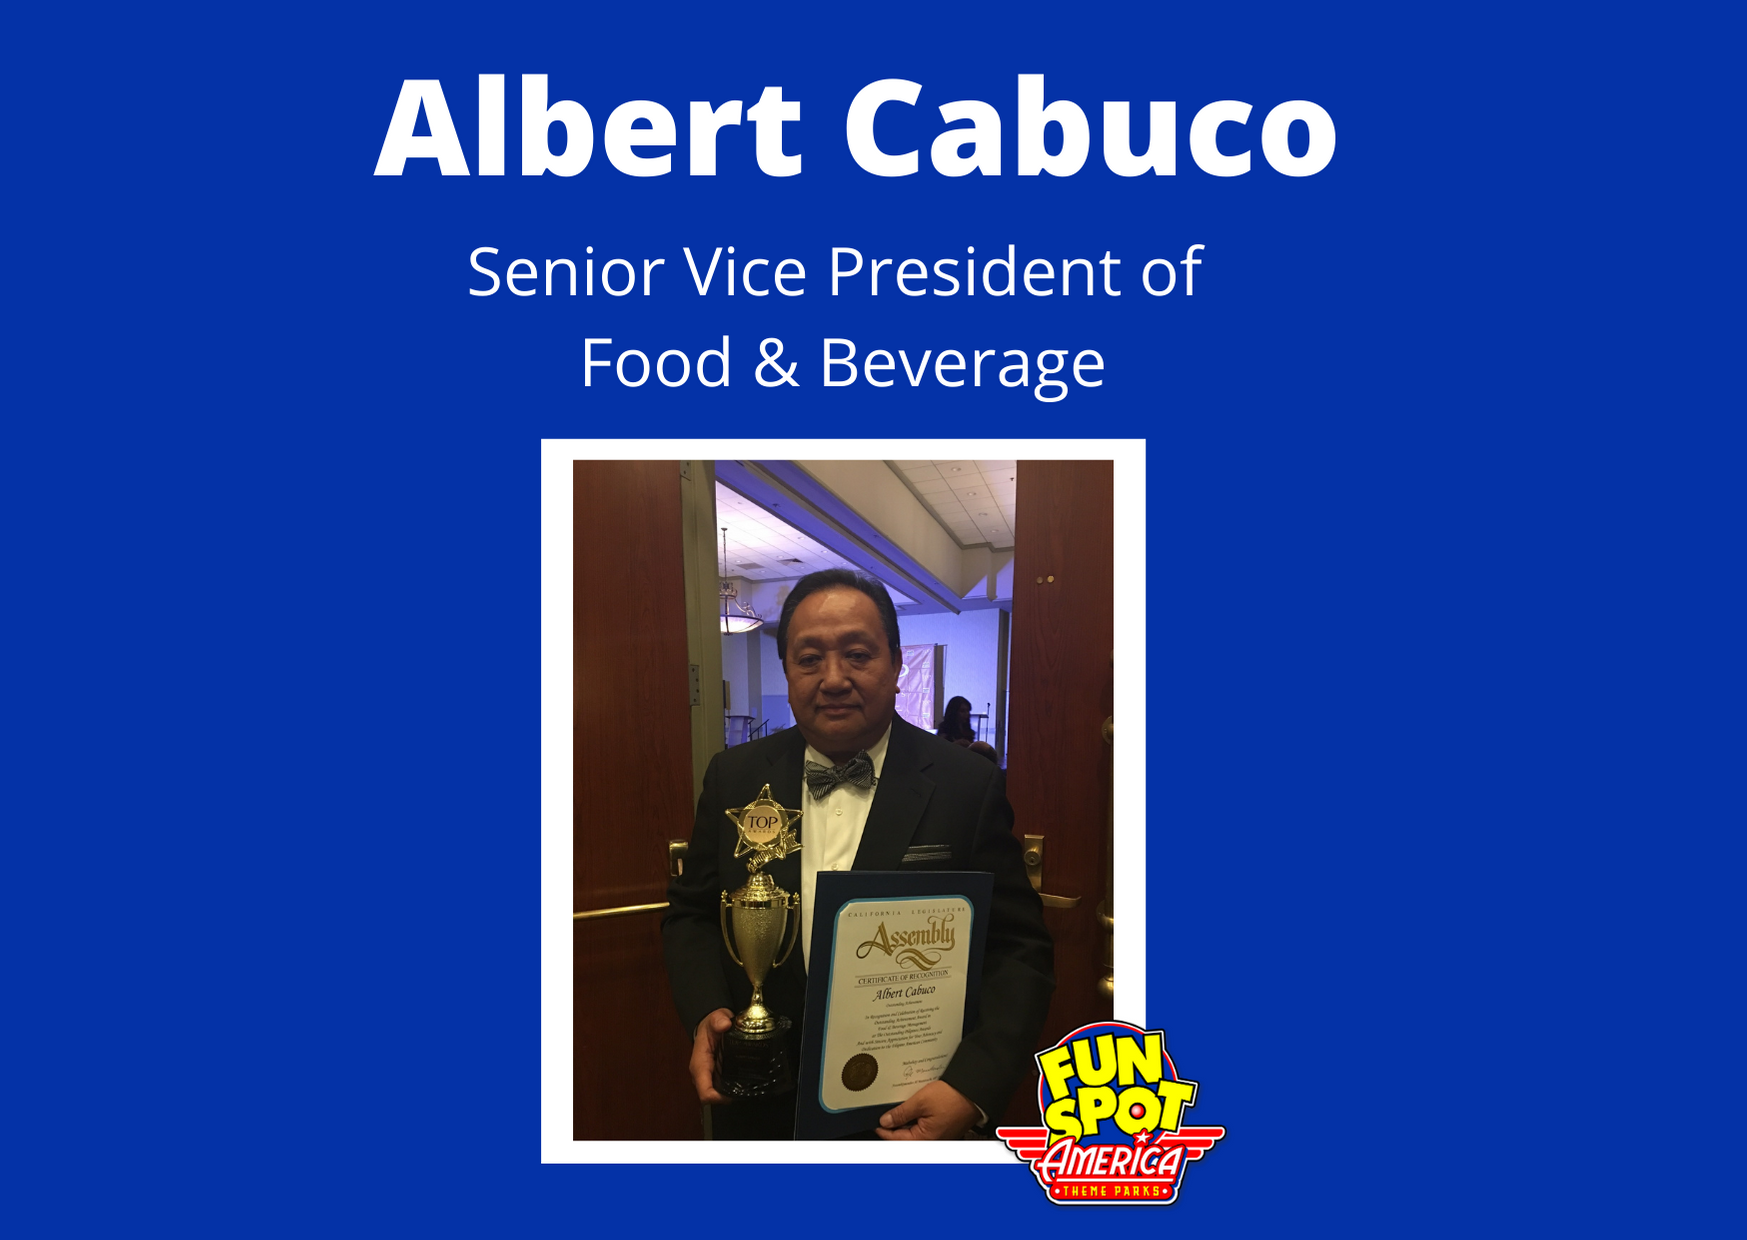 Albert Cabuco Senior Vice President of Food & Beverage